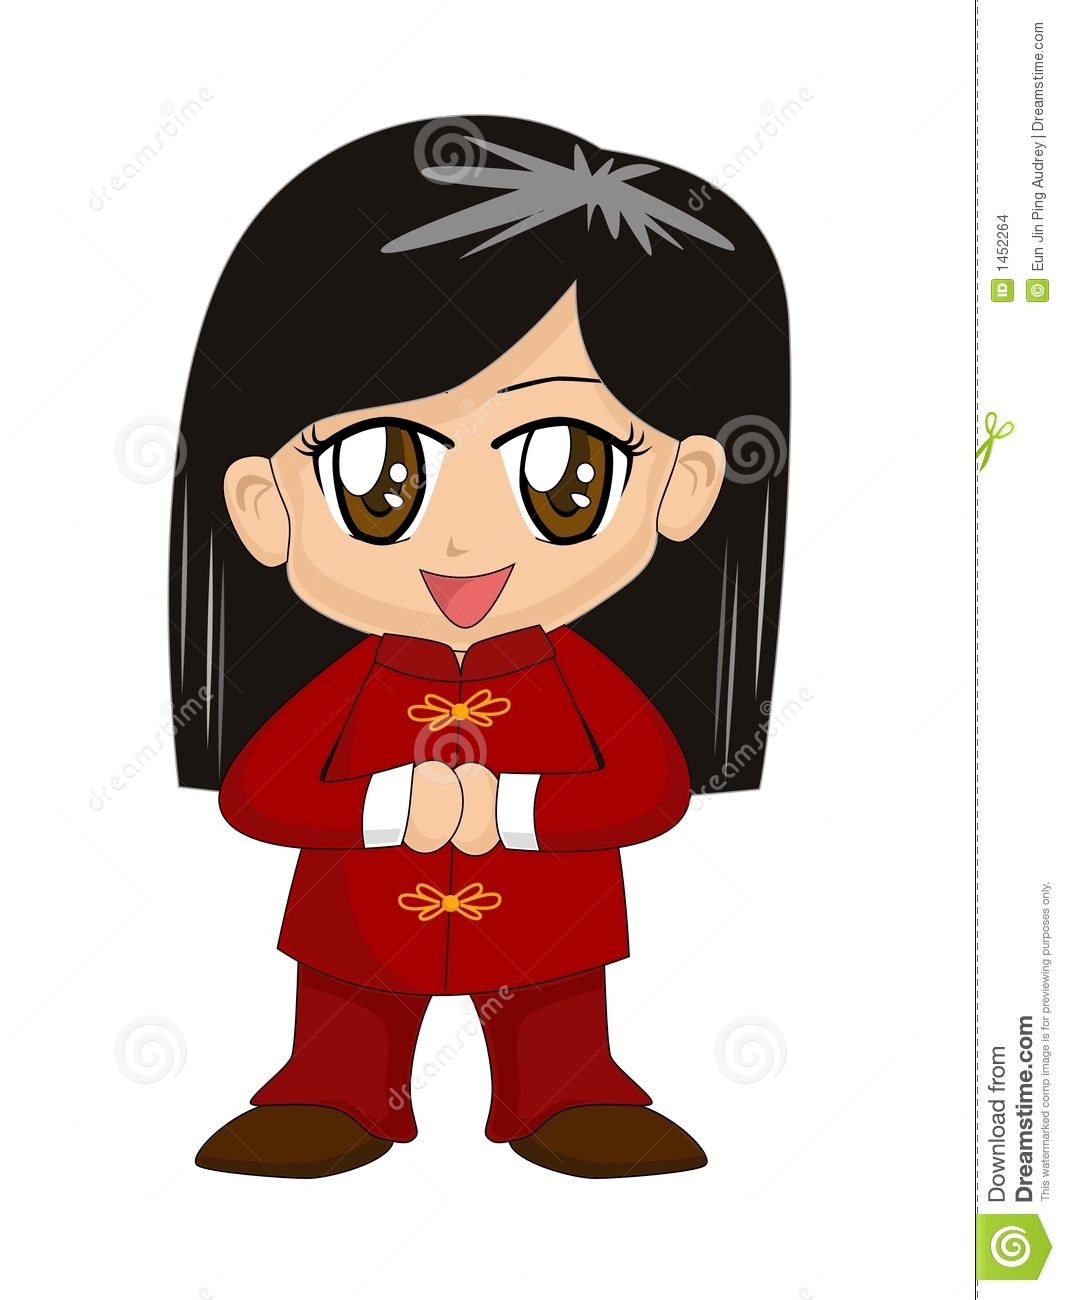 Cute Chinese Cartoon Girl Wishing You A Happy Chinese New Year 